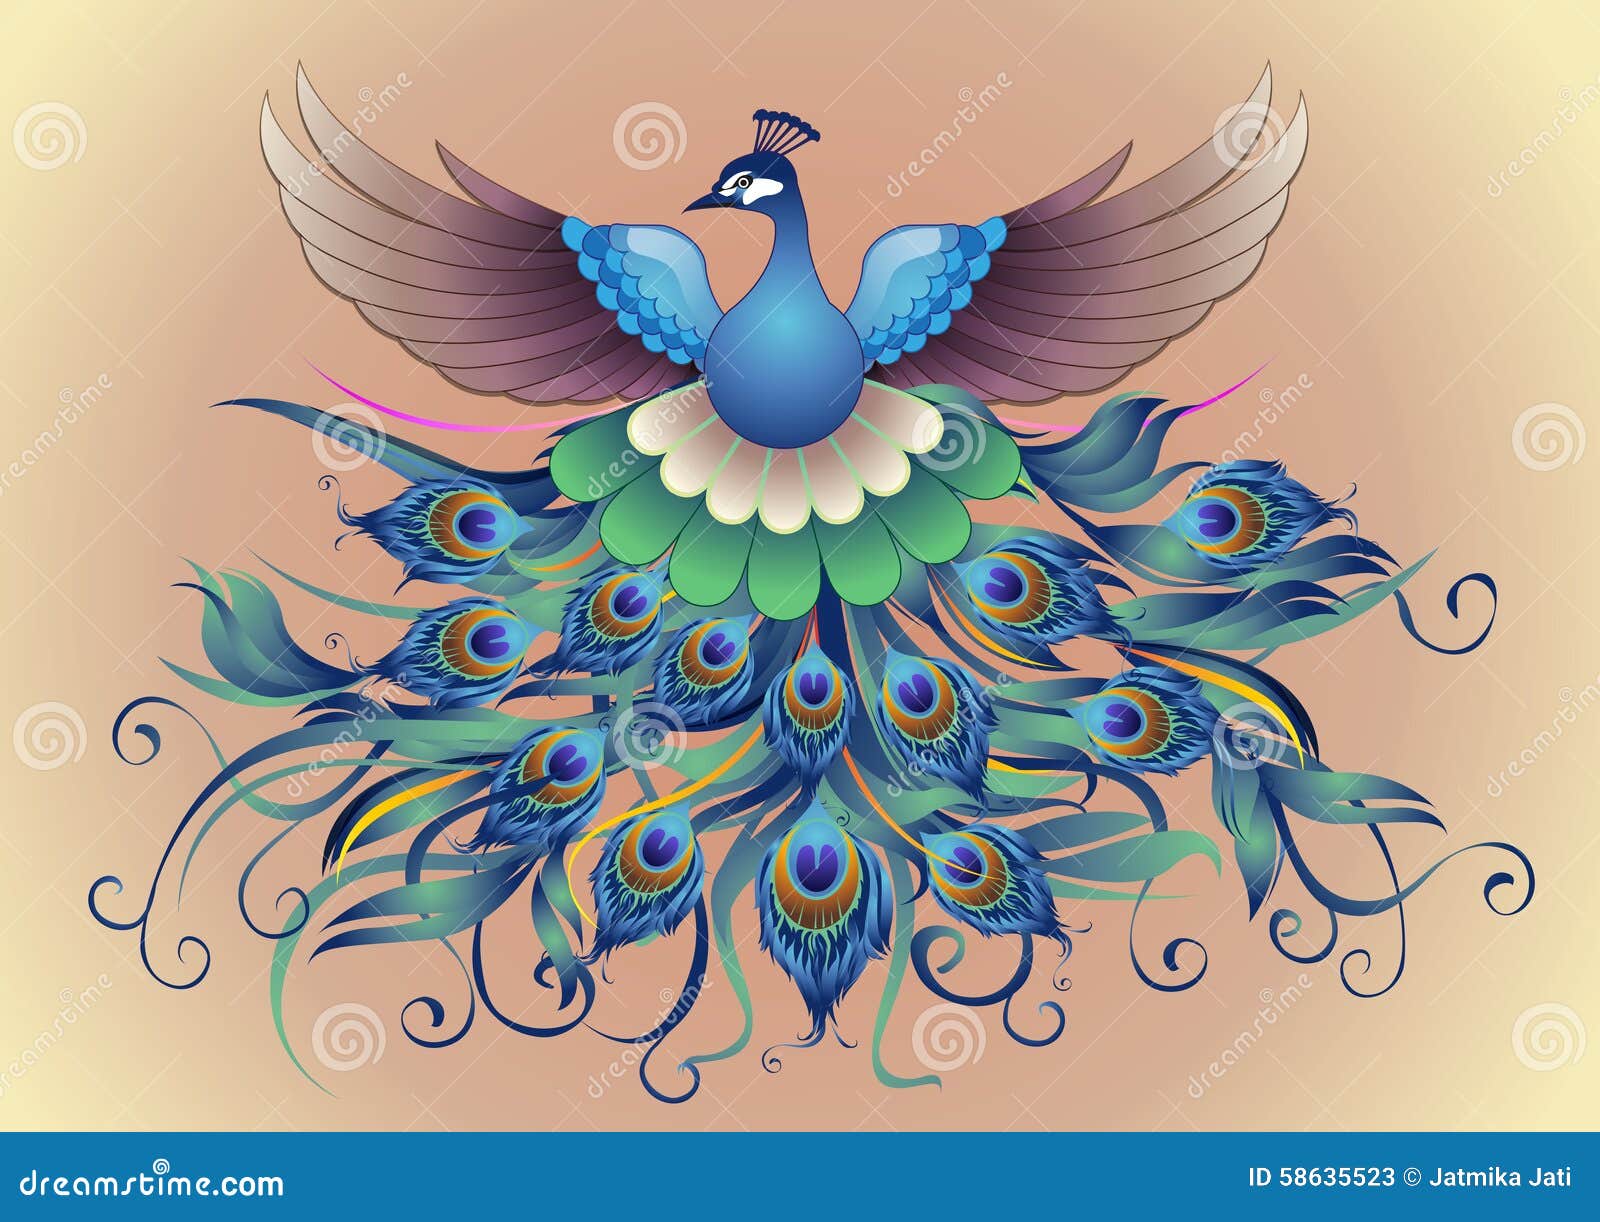 Explore the Best Peacockwing Art | DeviantArt